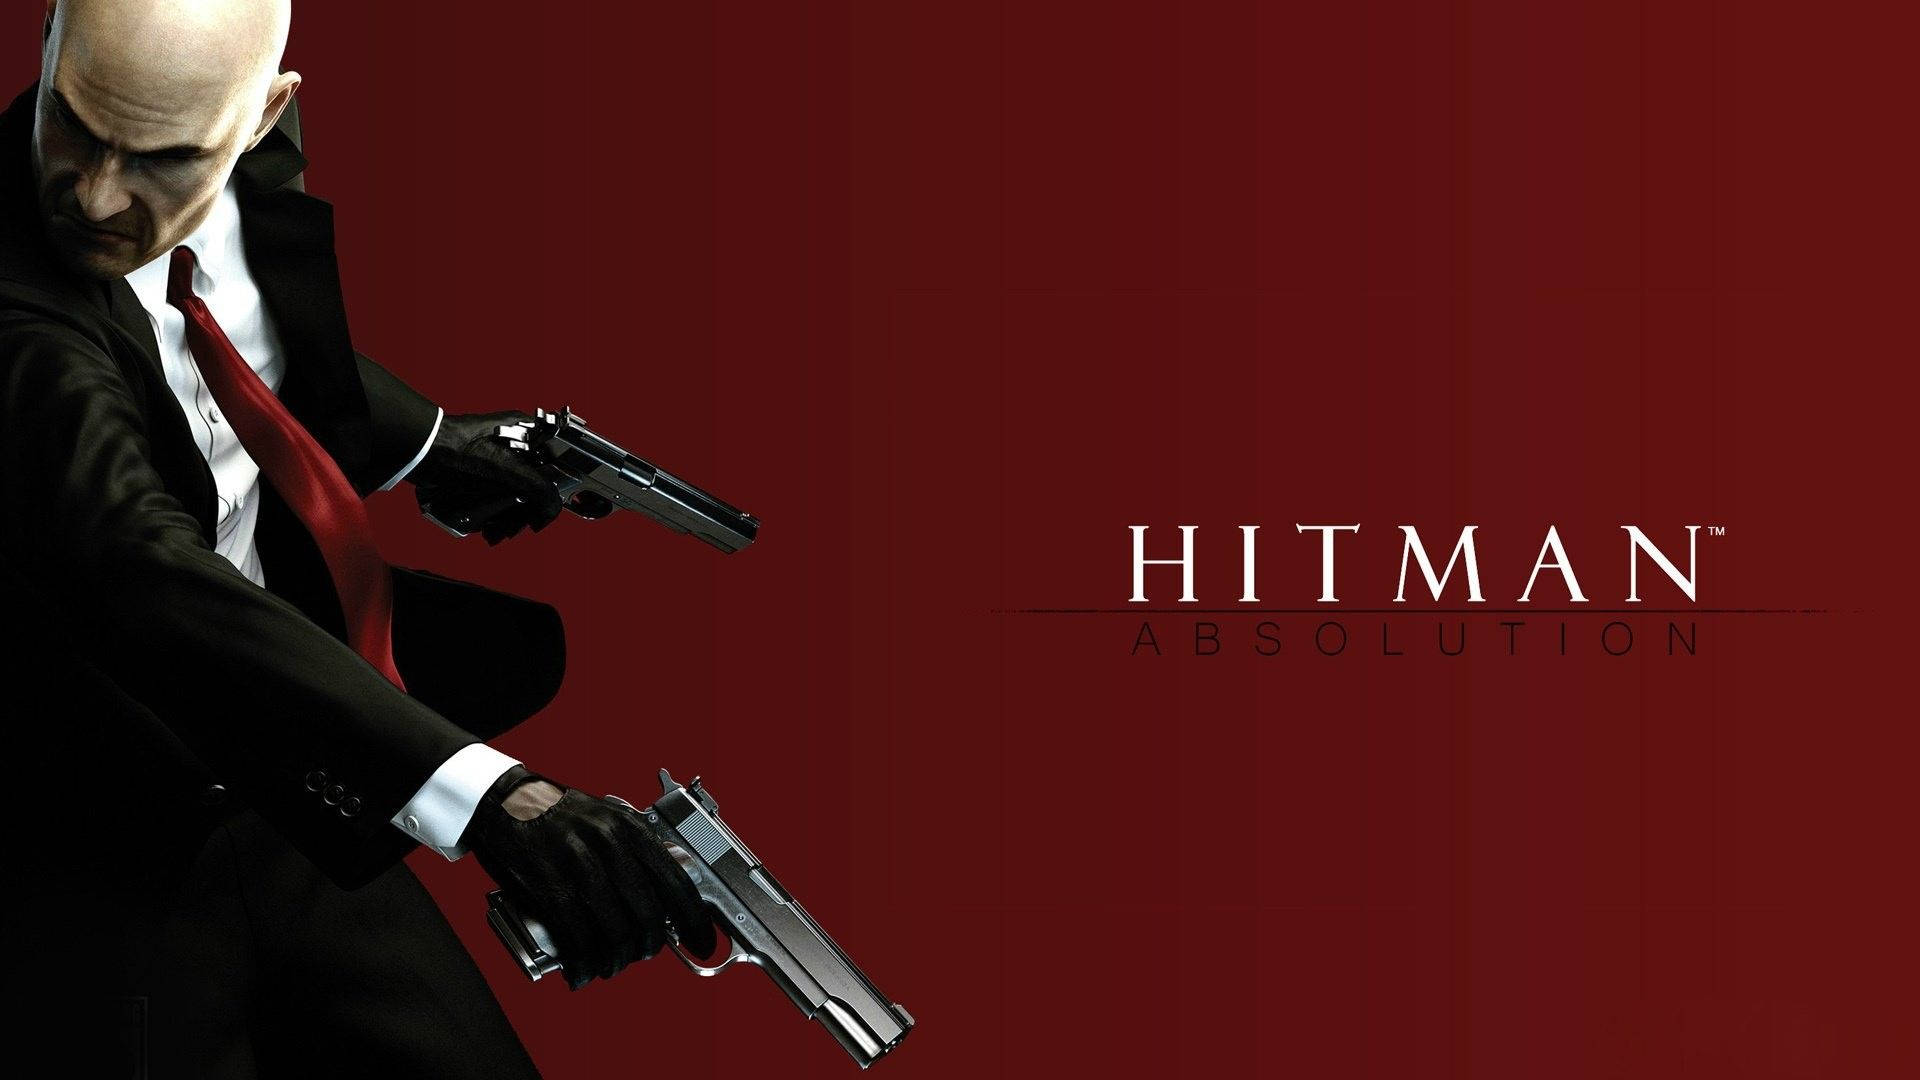 Hitman Absolution Dark Red Poster Background